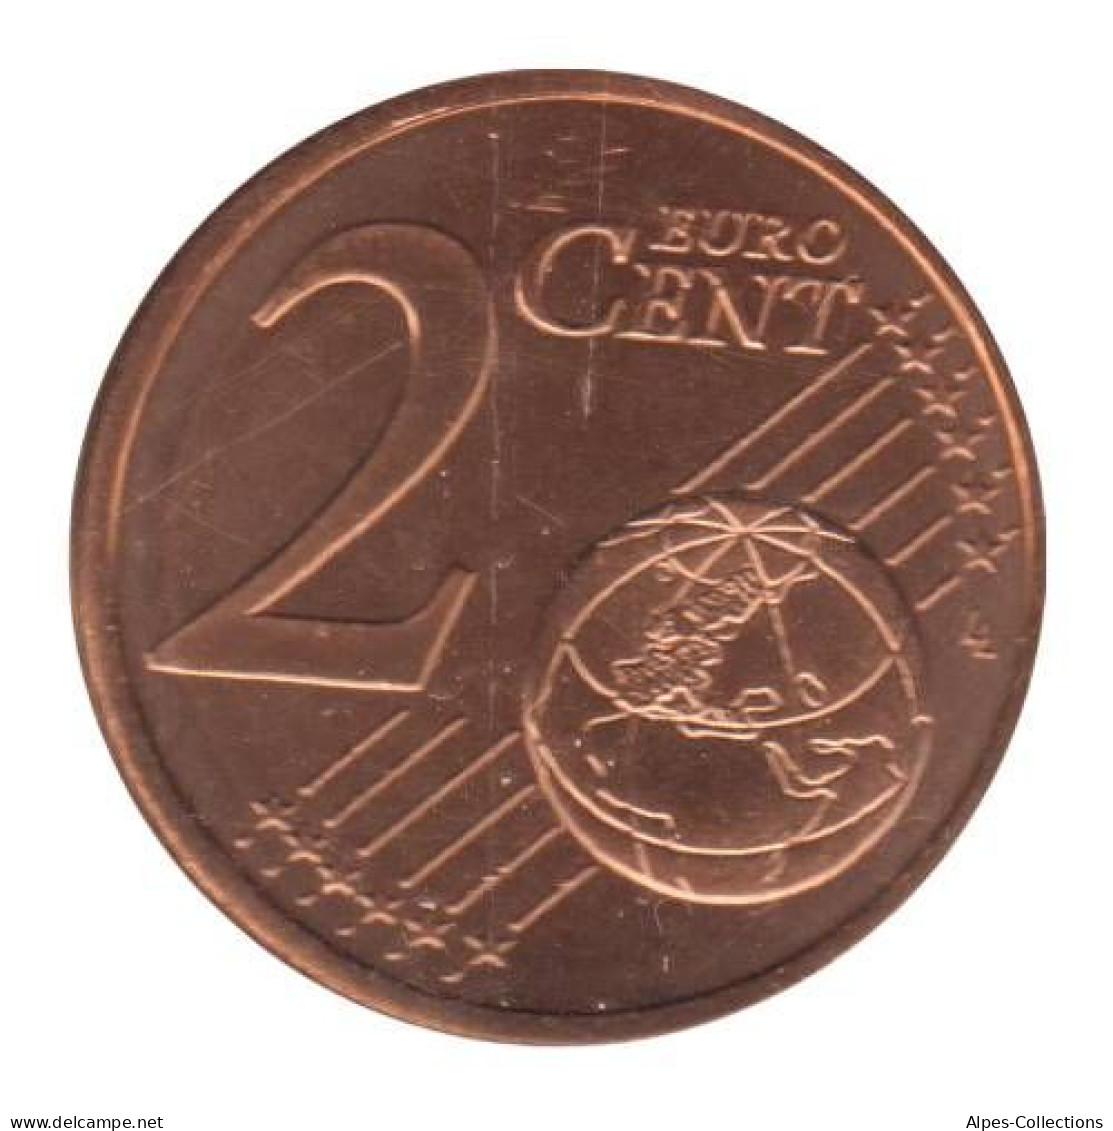 FR00210.2 - FRANCE - 2 Cents - 2010 - BU - France